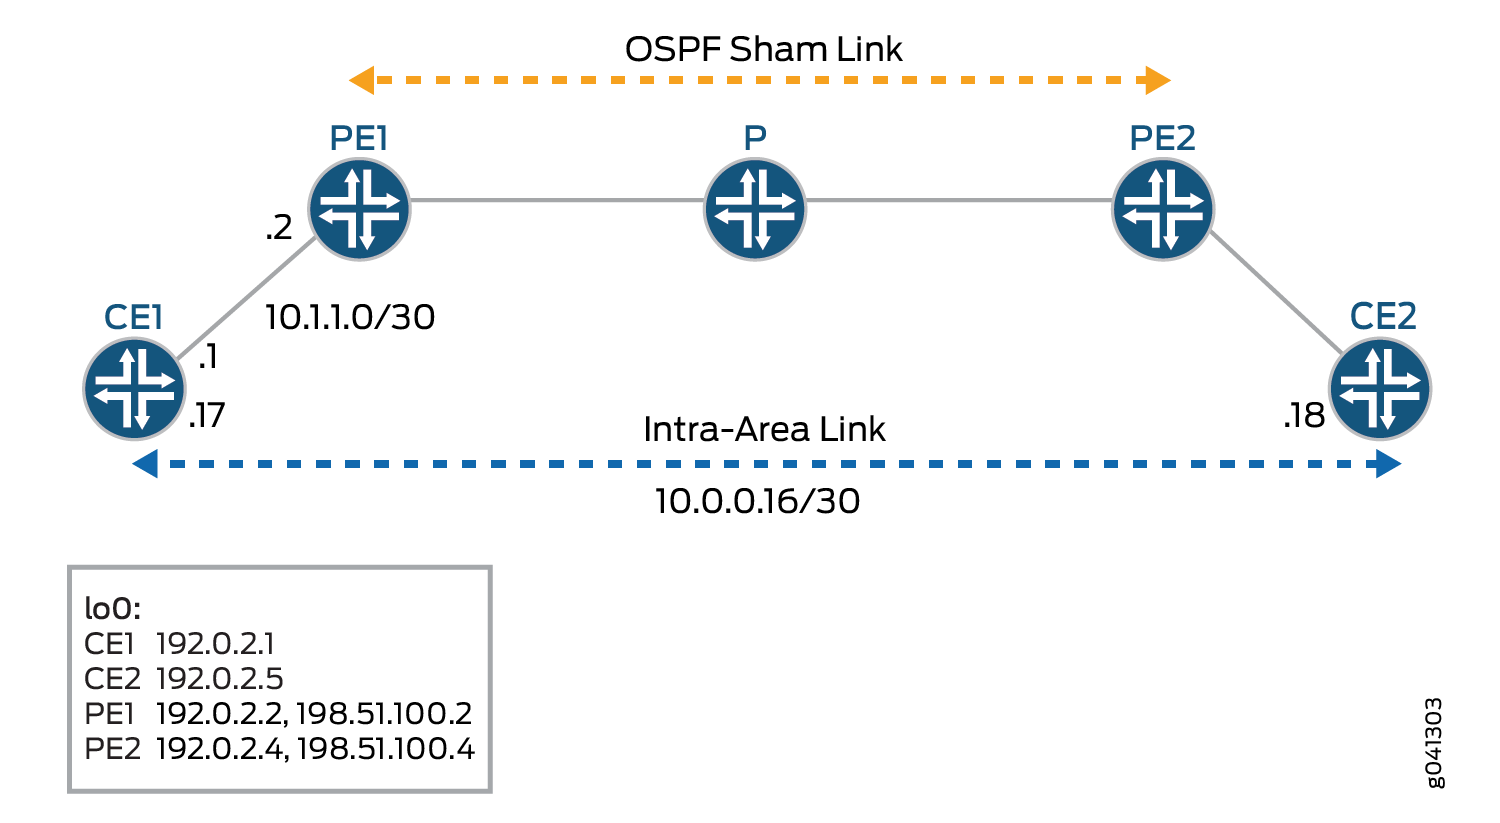 OSPFv2 Sham Link Example